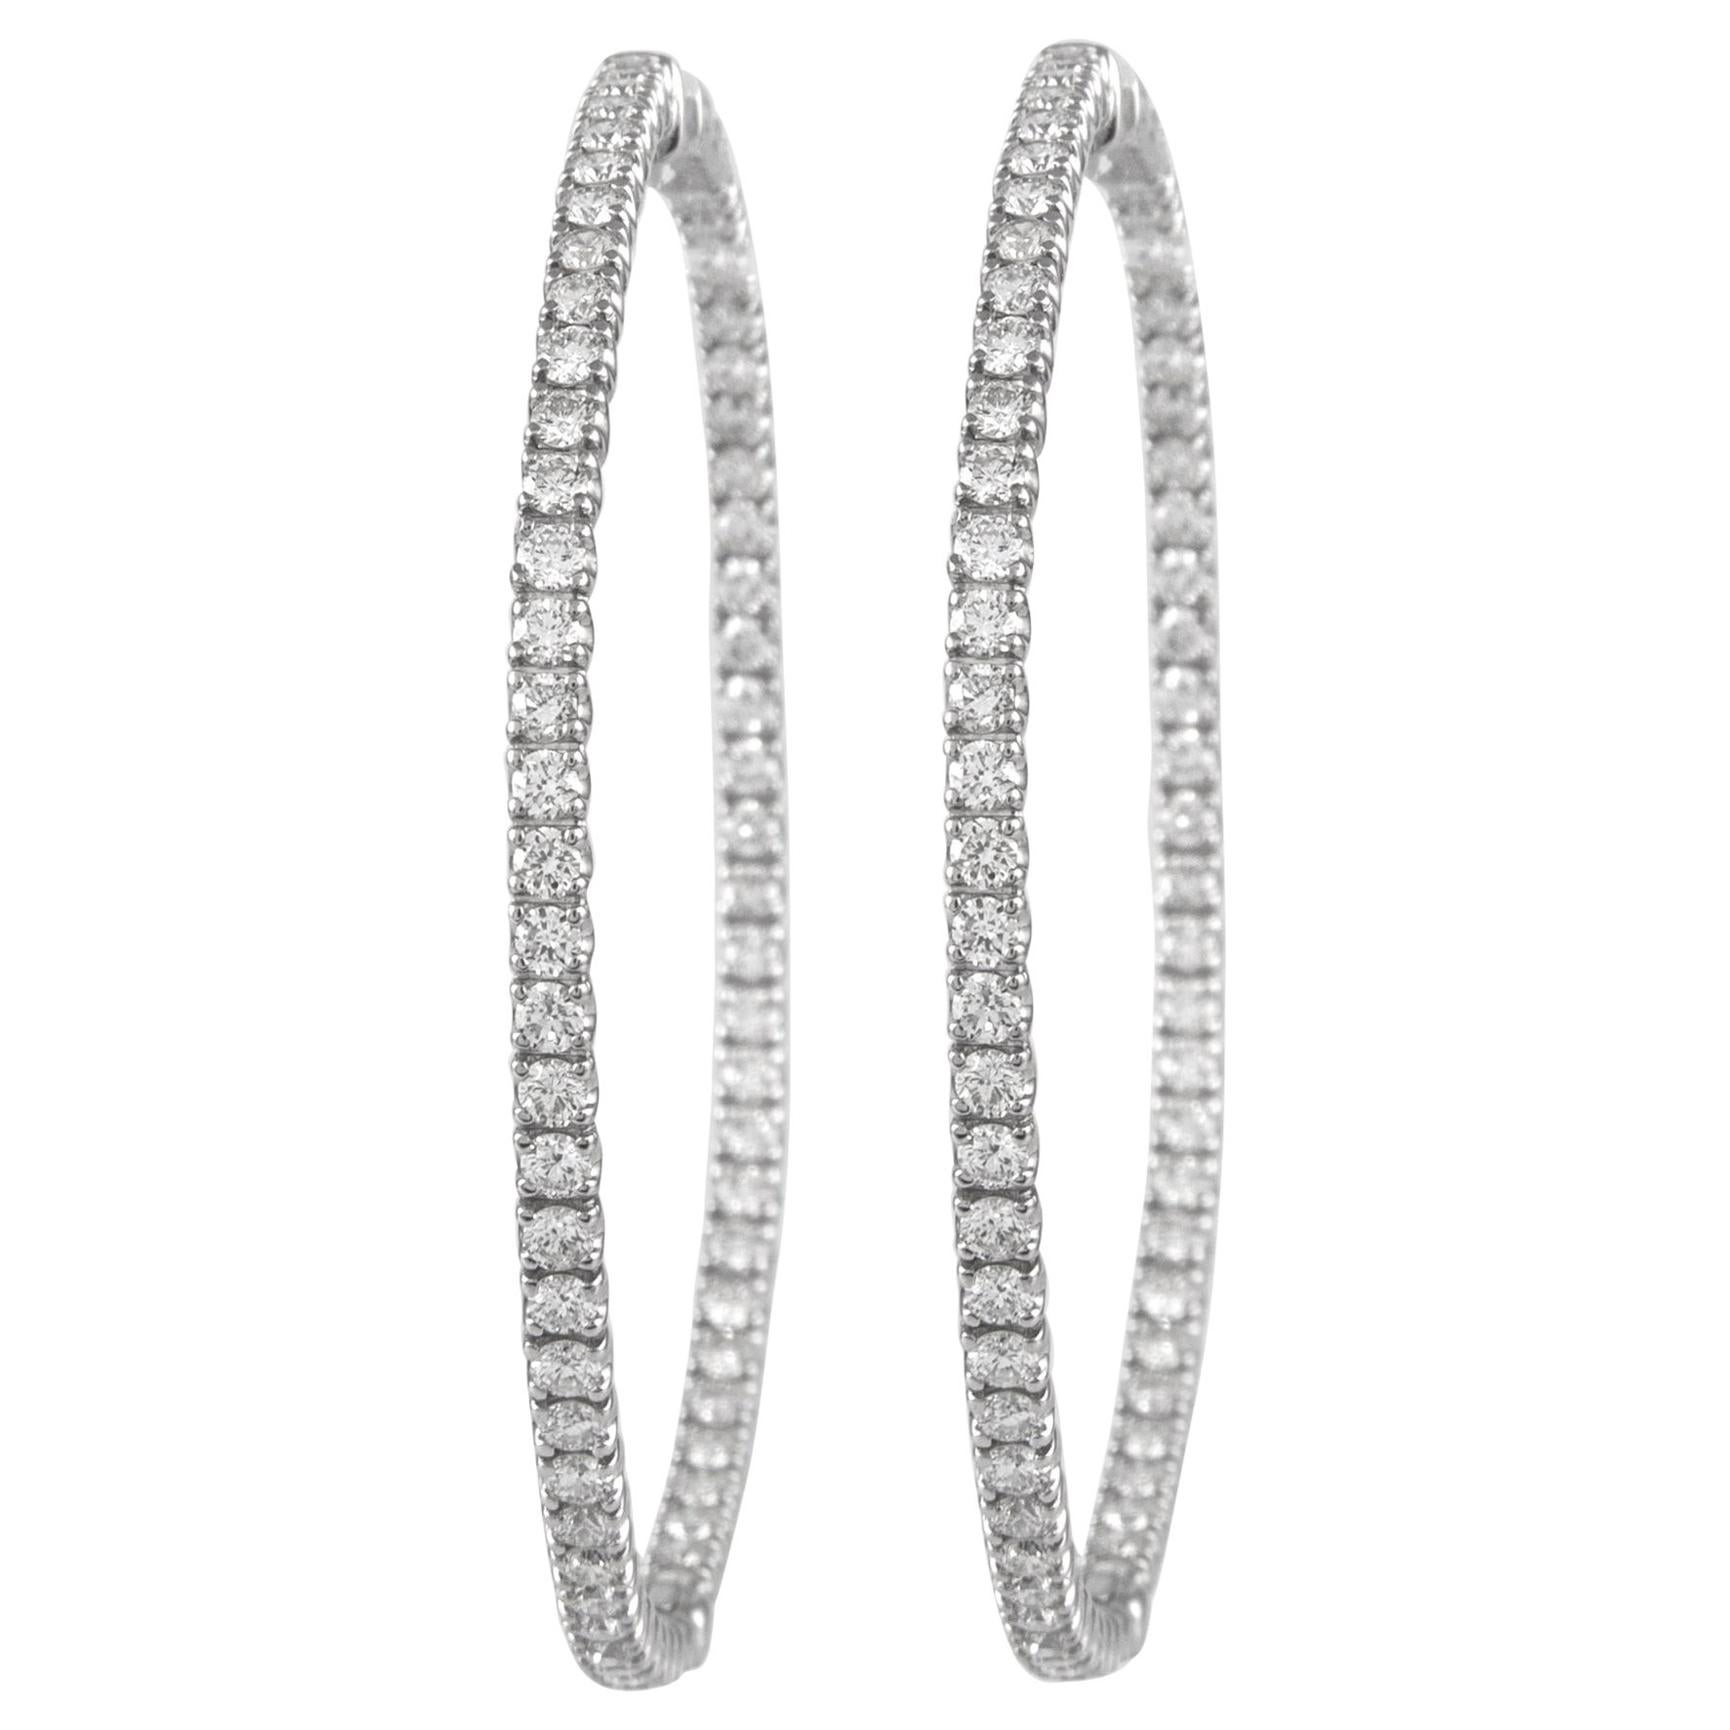 Alexander 5.04 Carat Diamond Hoop Earrings White Gold